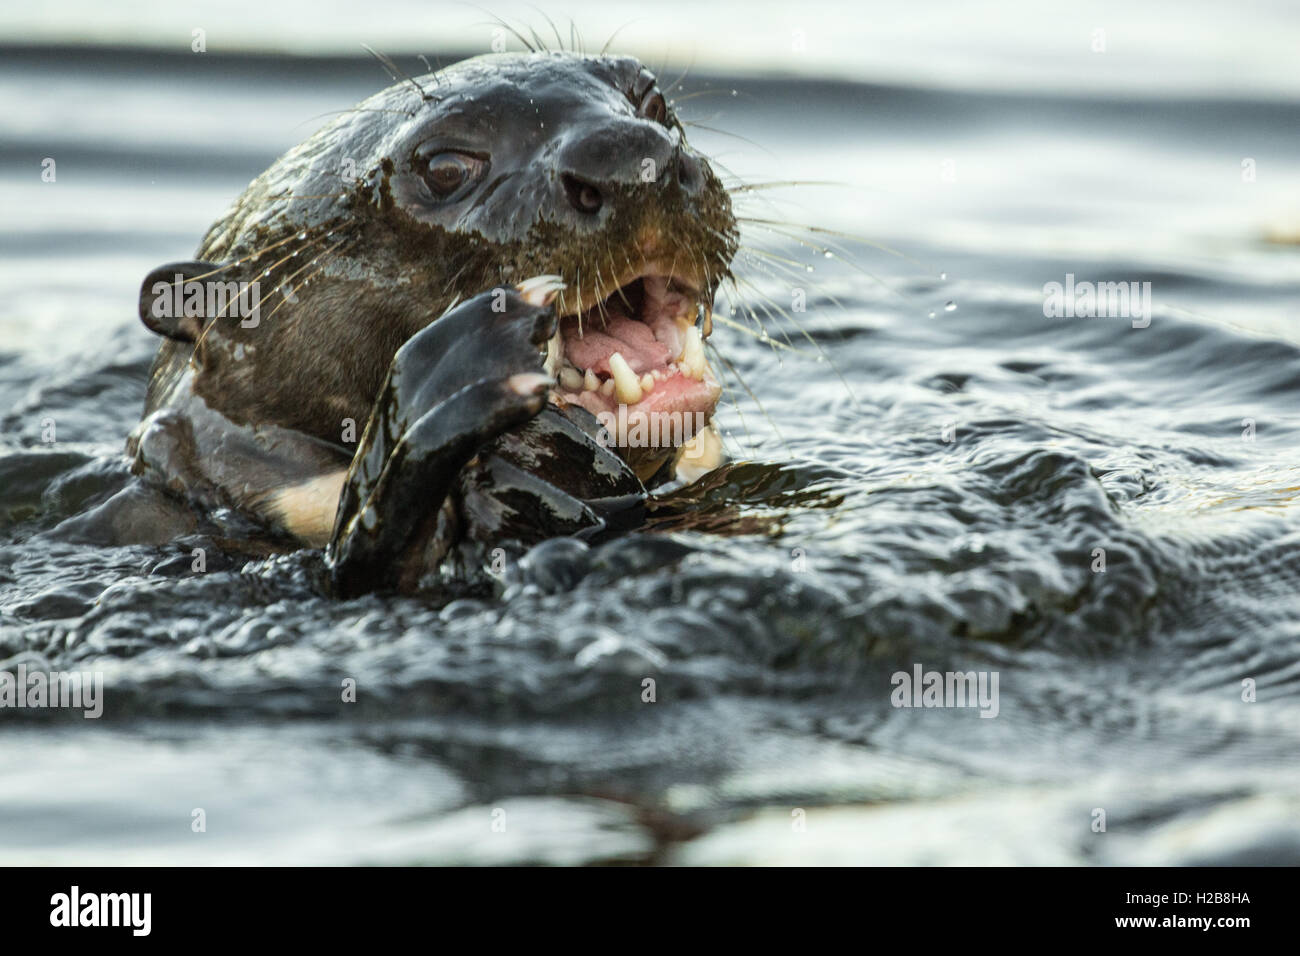 Endangered Giant River Otter (Pteronura brasilienis) eating a fish in ...